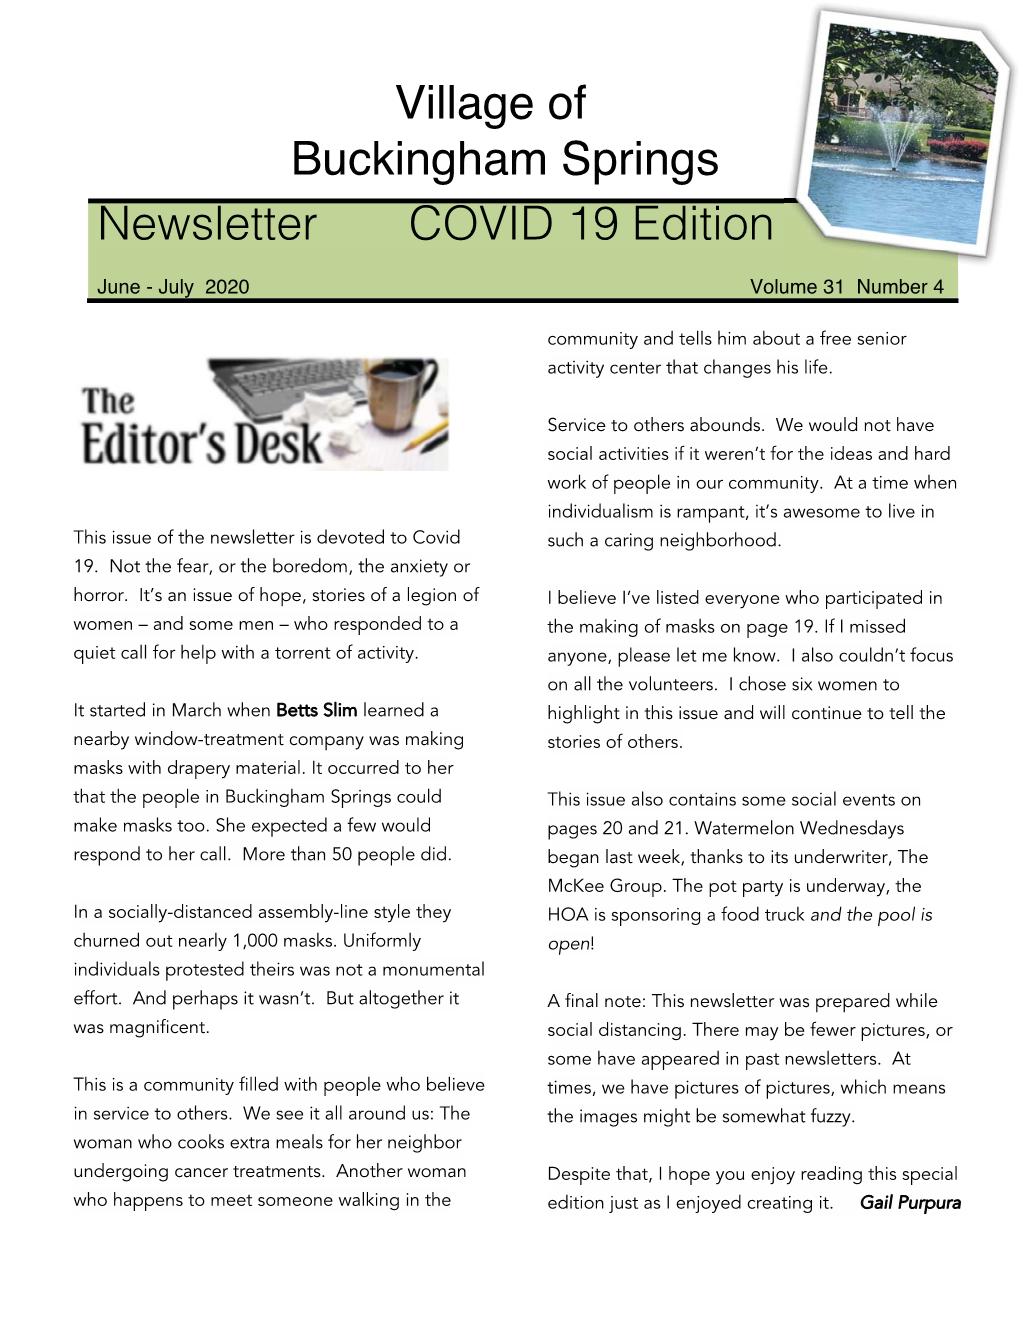 Village of Buckingham Springs Newsletter COVID 19 Edition